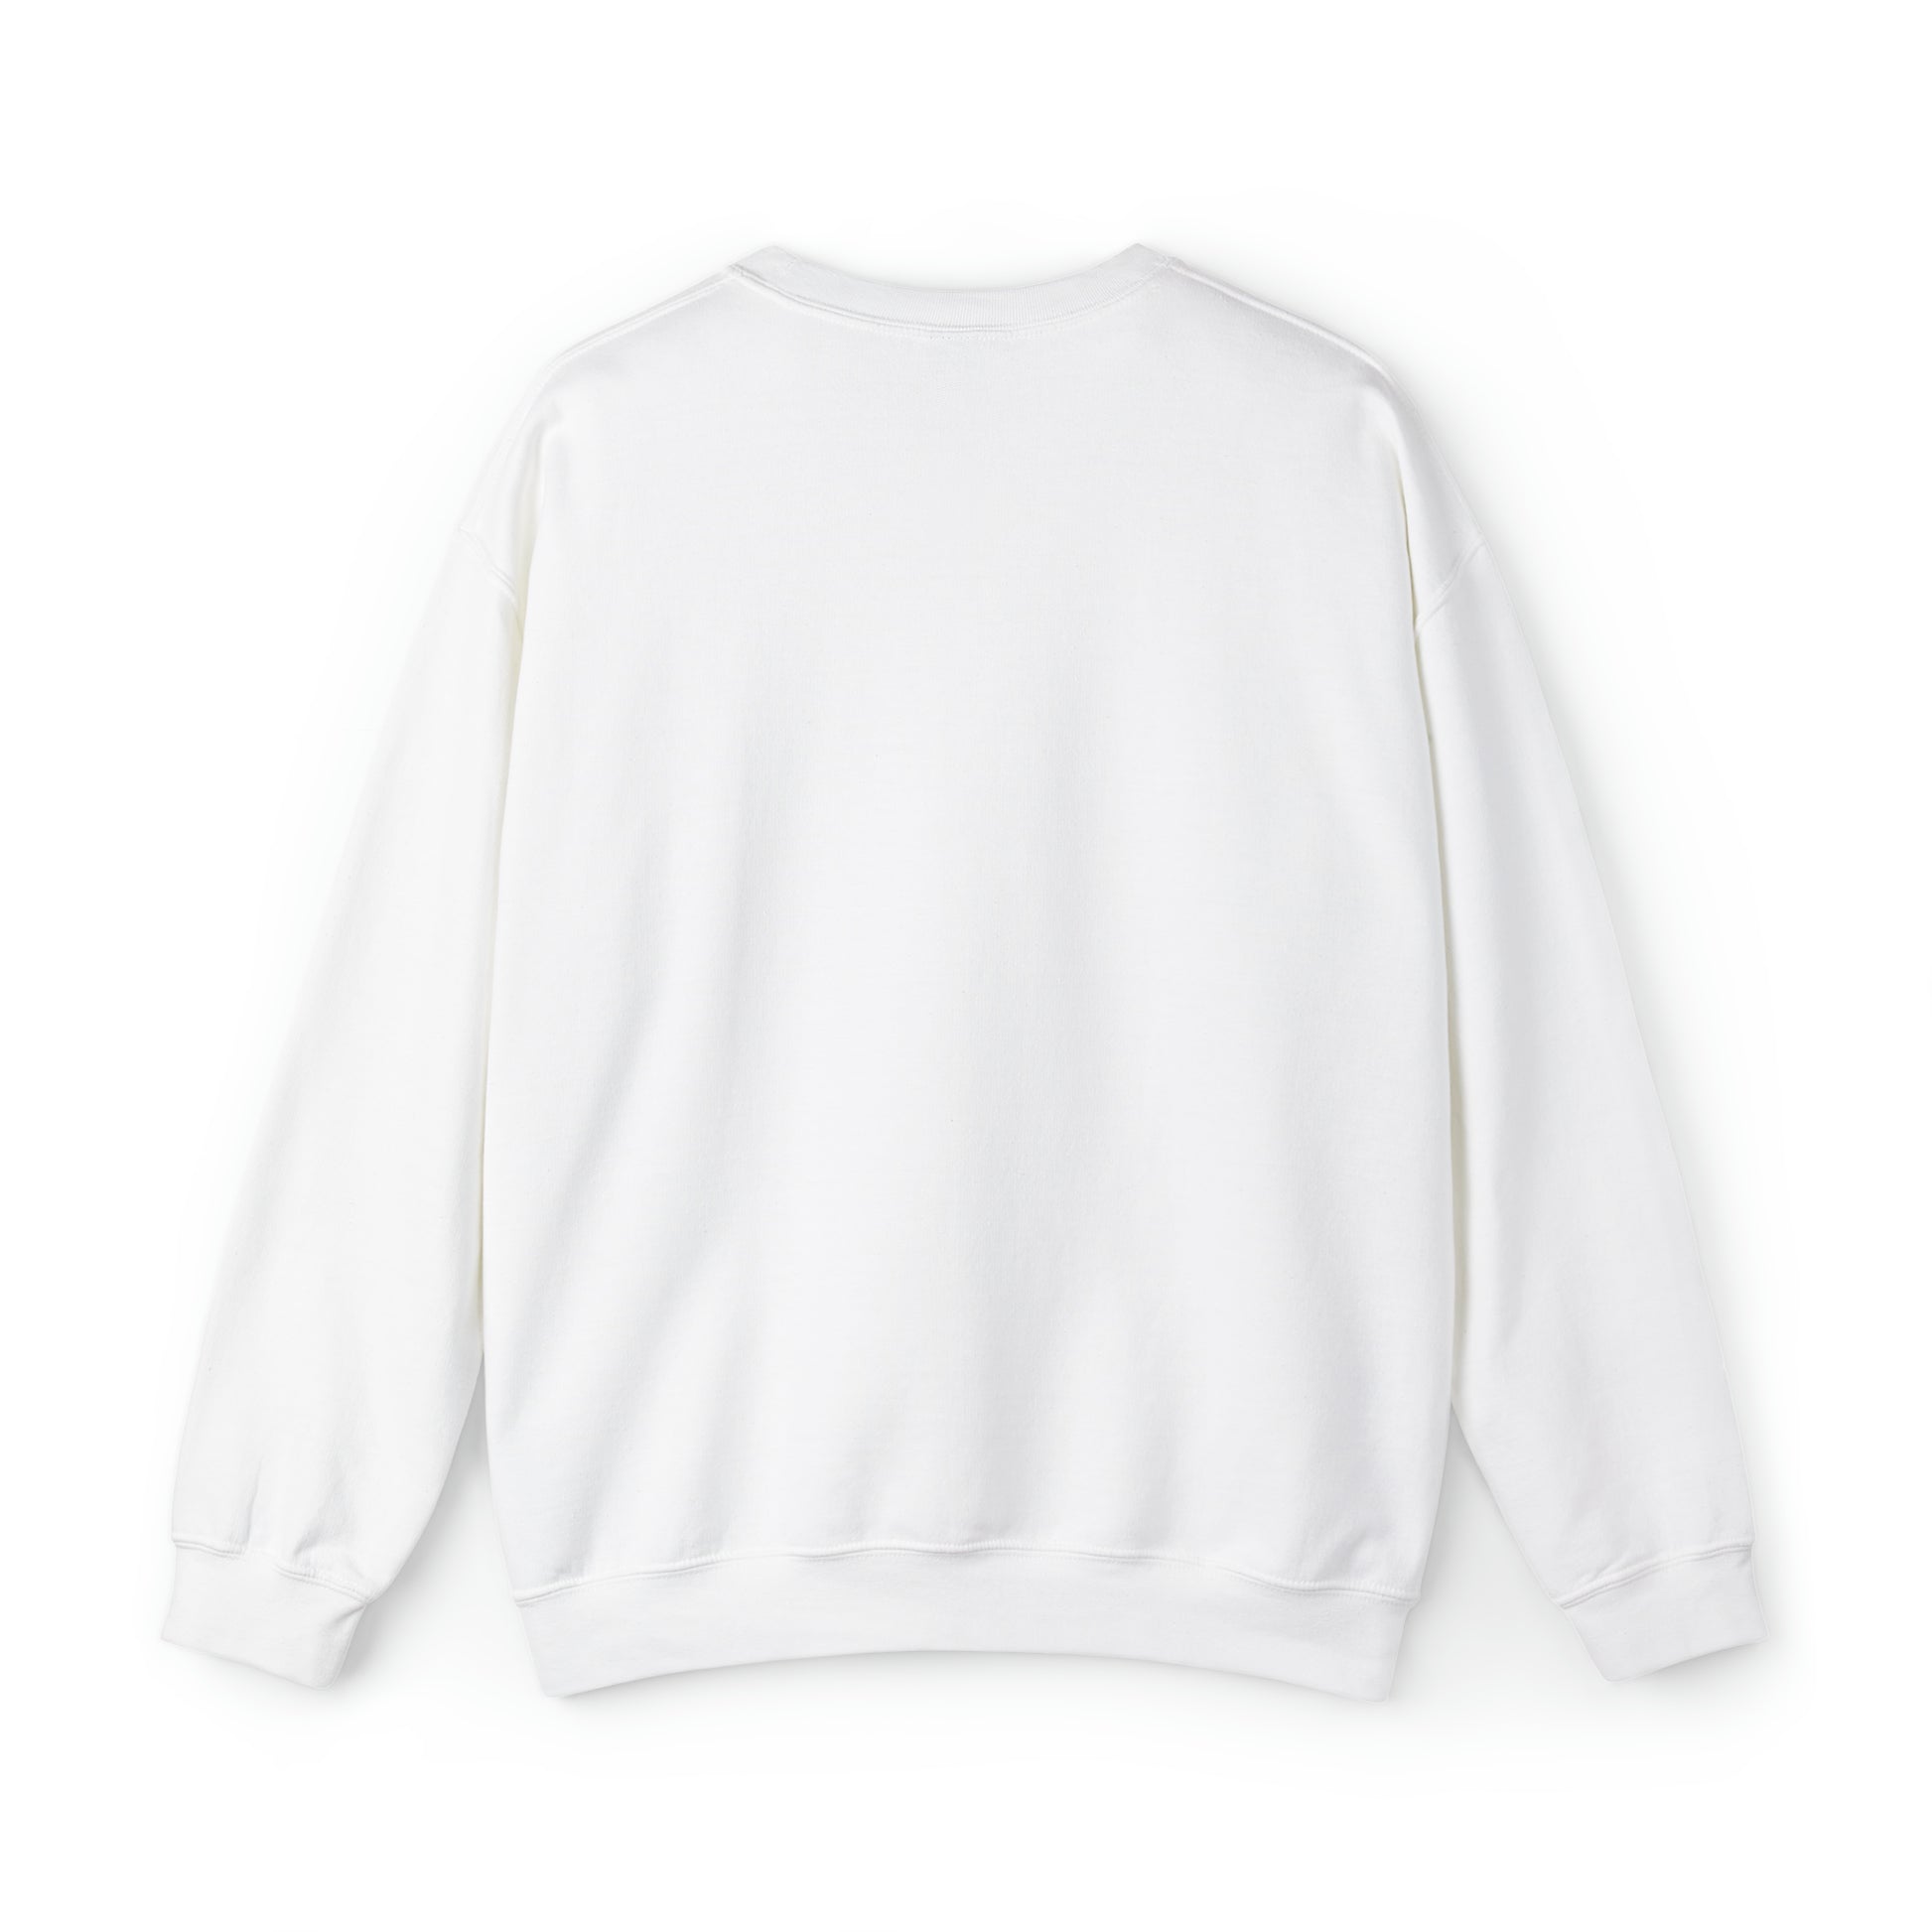 Unisex Boho Christmas Crewneck Sweatshirt - Prominent Styles of Sorts- PSS!